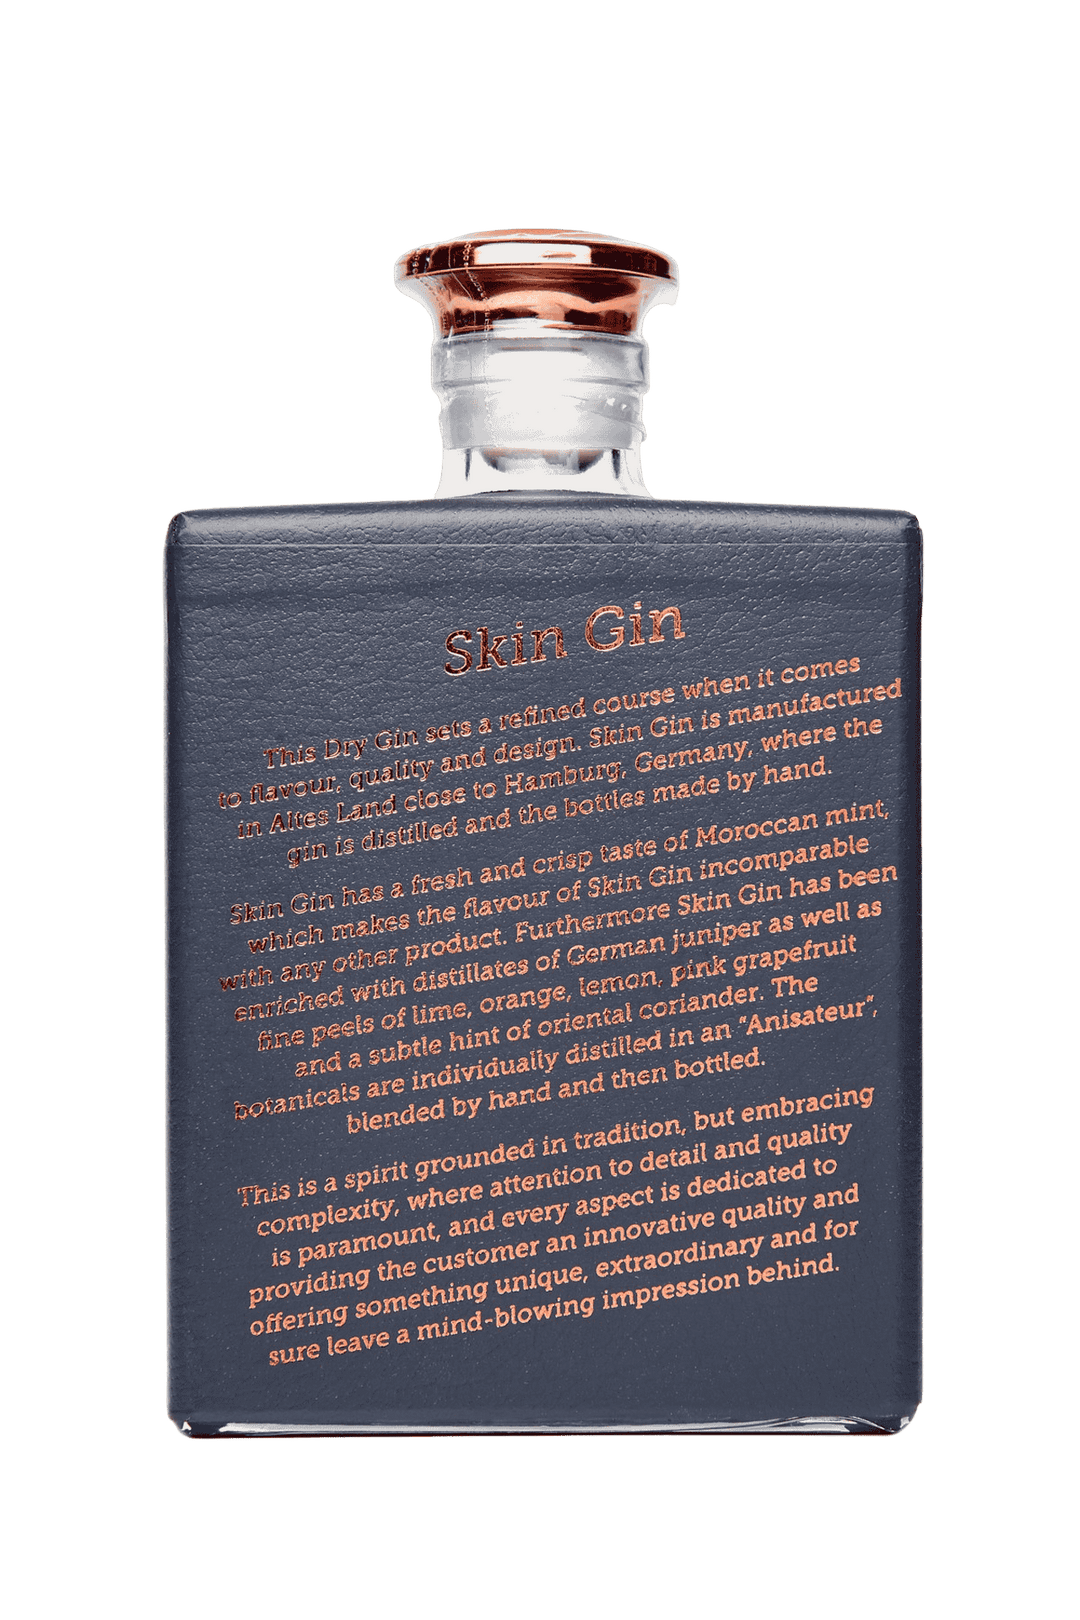 Skin Gin Anthracite Grey Edition Box